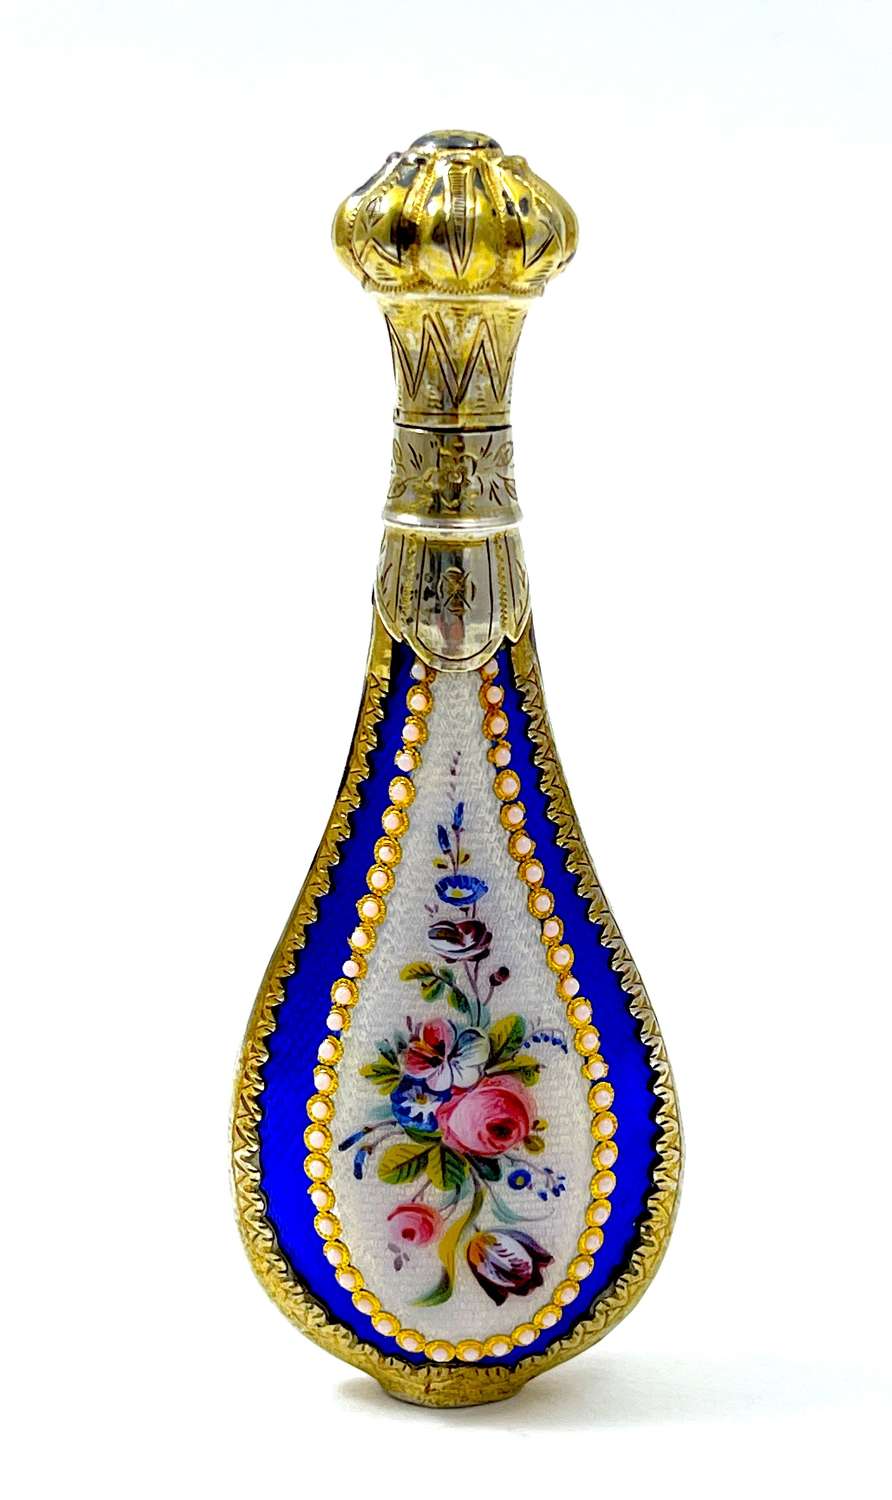 Exquisite High Quality Antique French Guillouche Enamel Scent Bottle